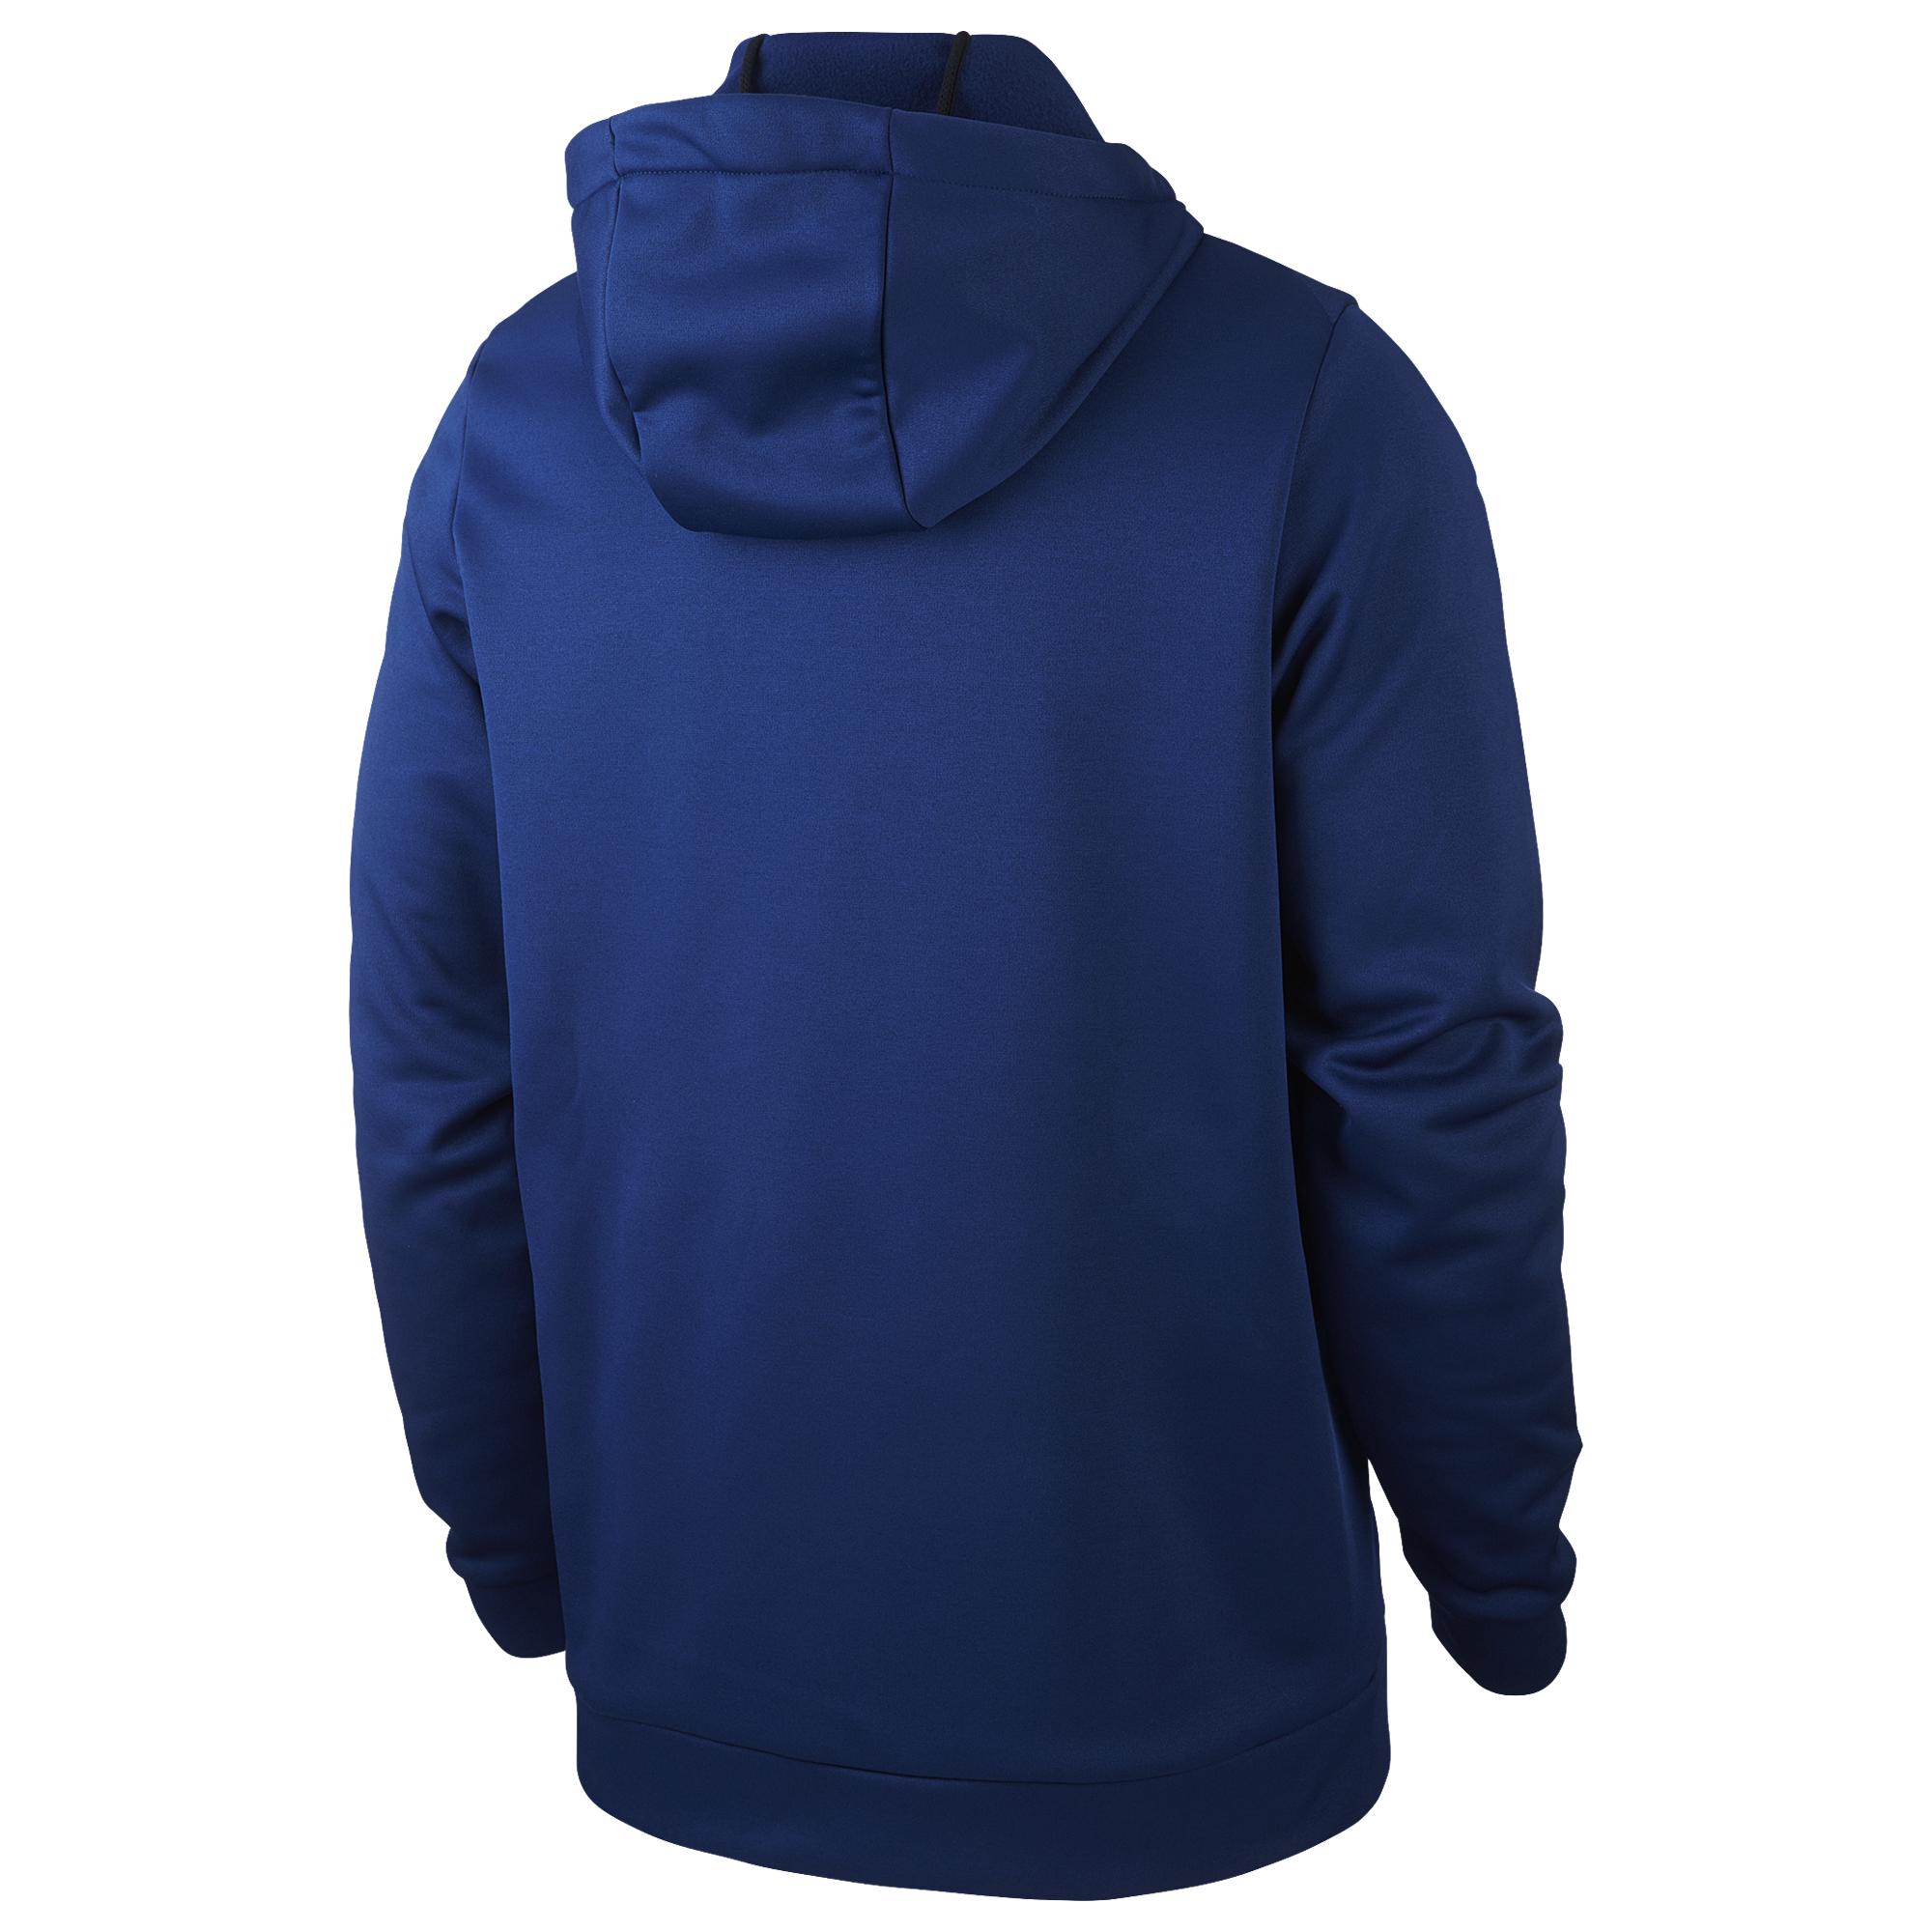 Nike Therma Fleece Graphic Swoosh Hoodie in Blue for Men - Lyst